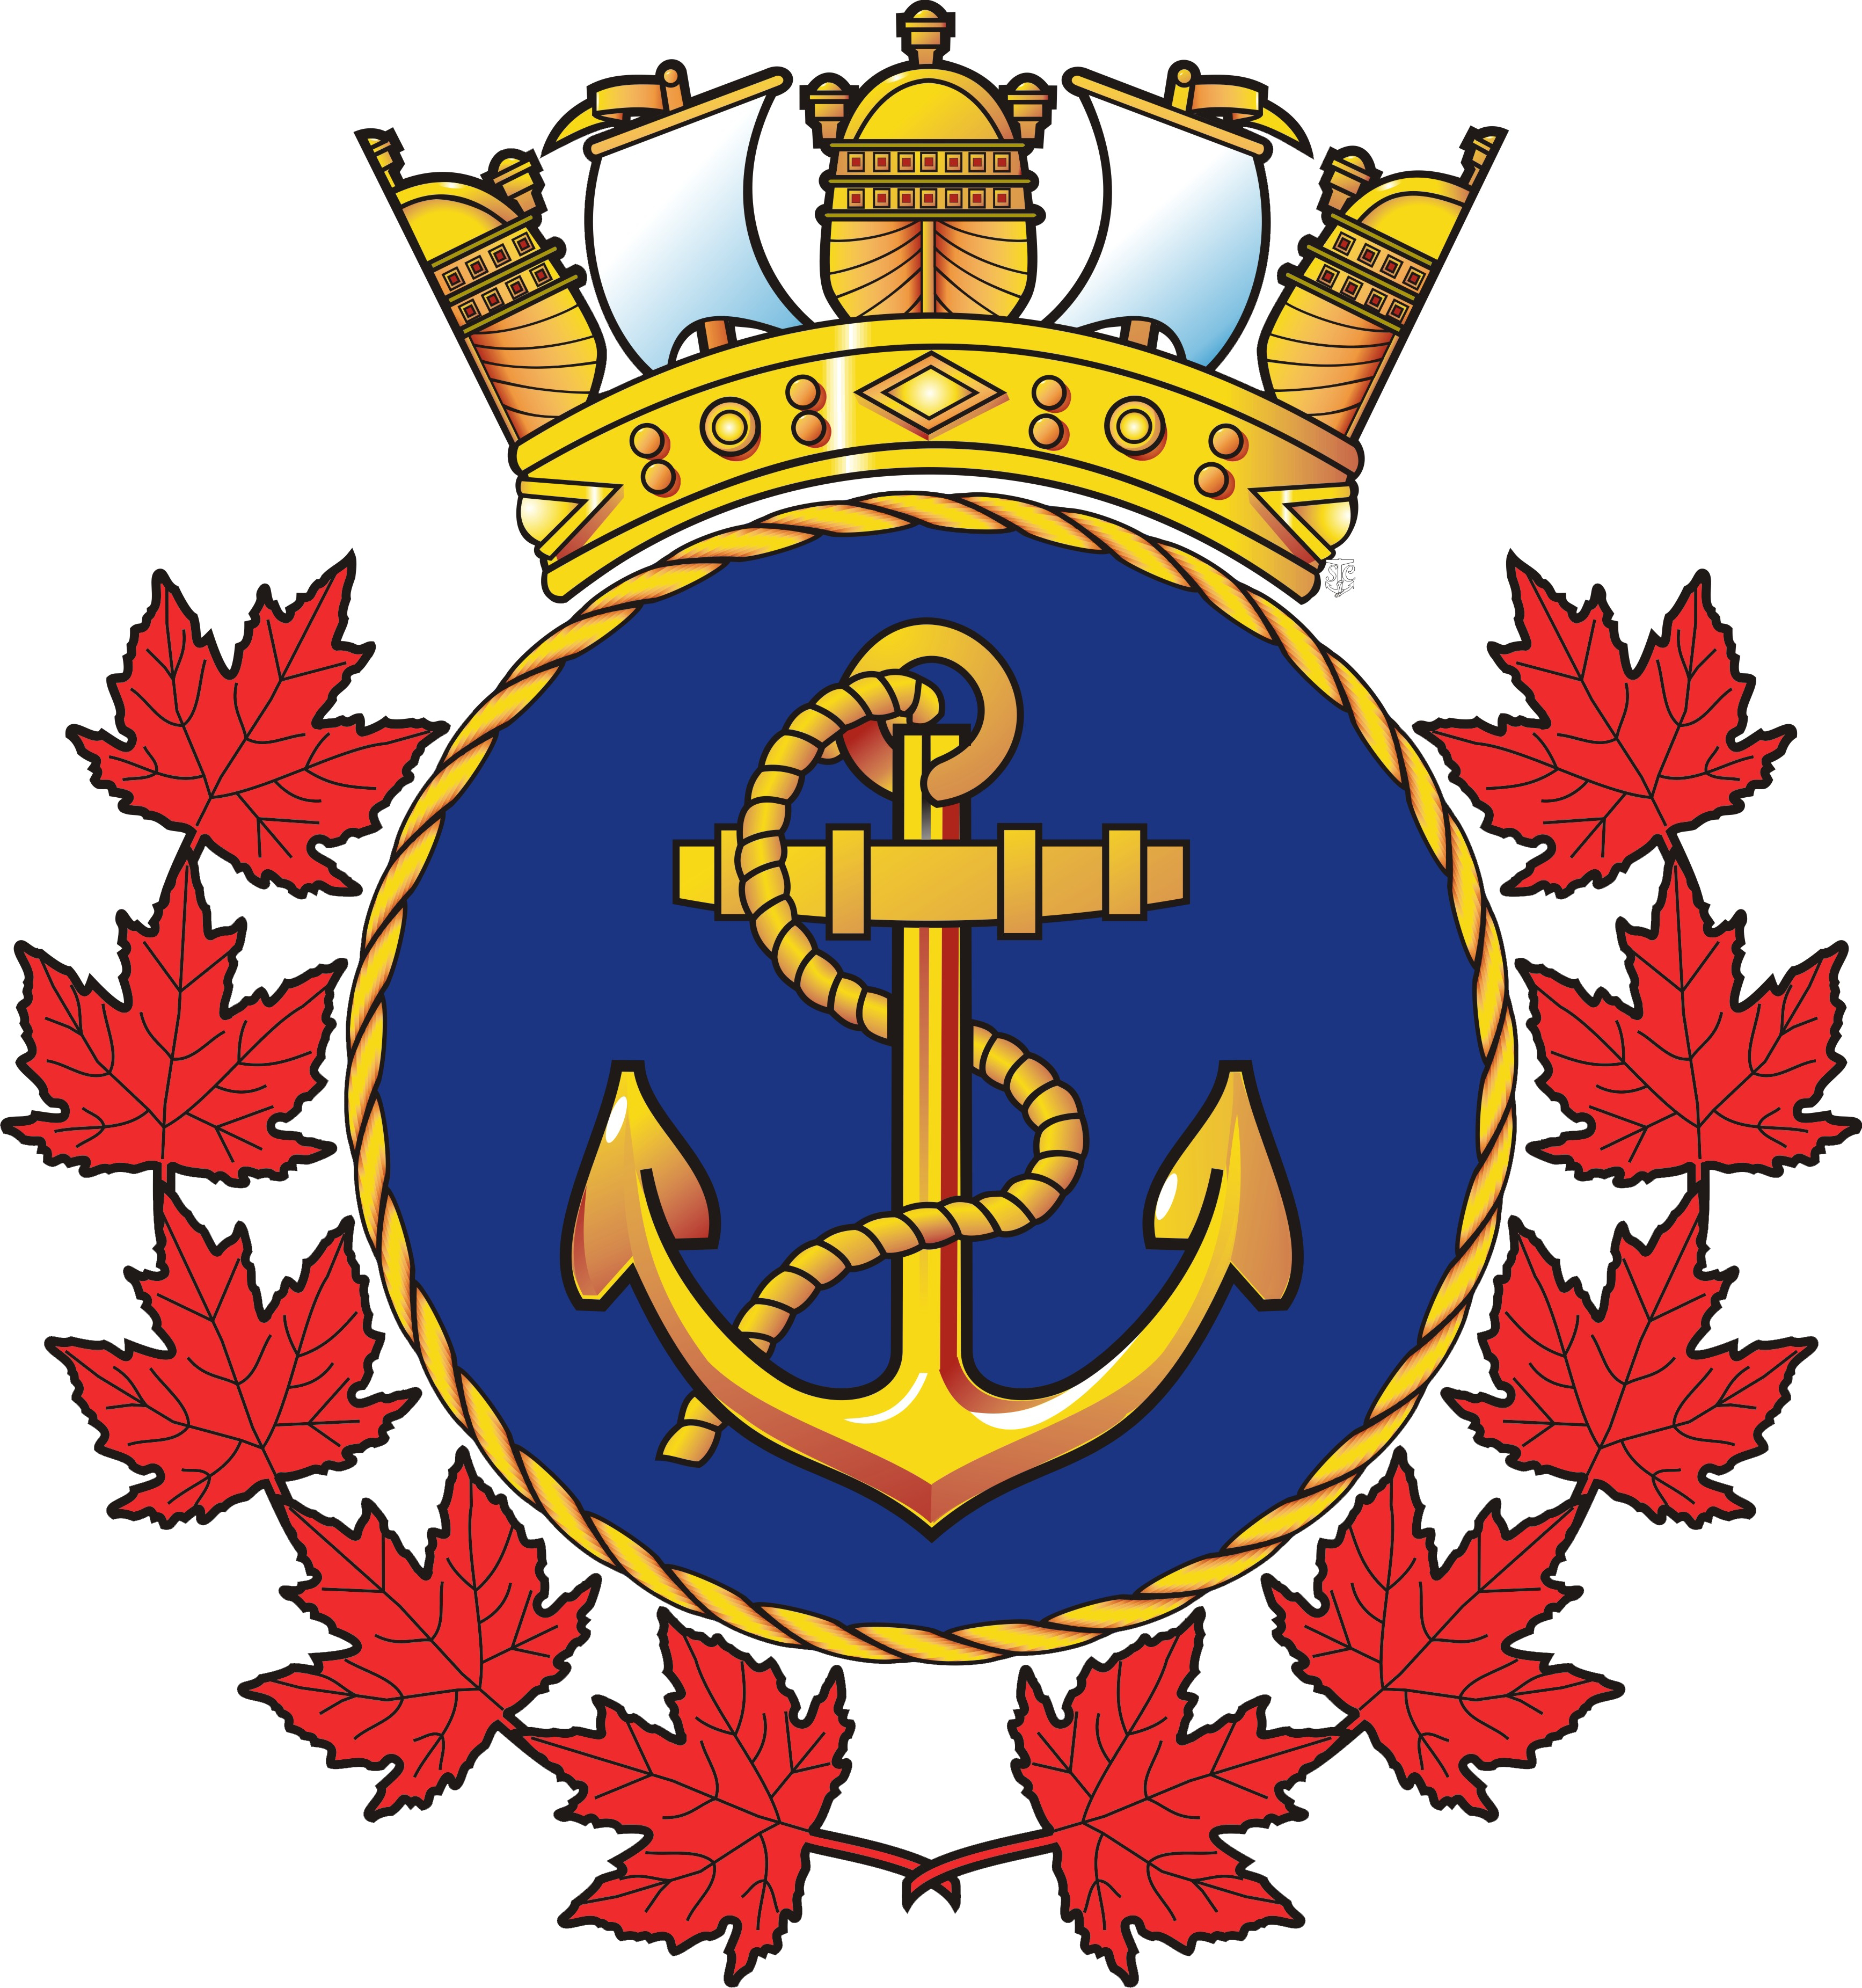 The Royal Canadian Sea Cadet Scholarship Foundation